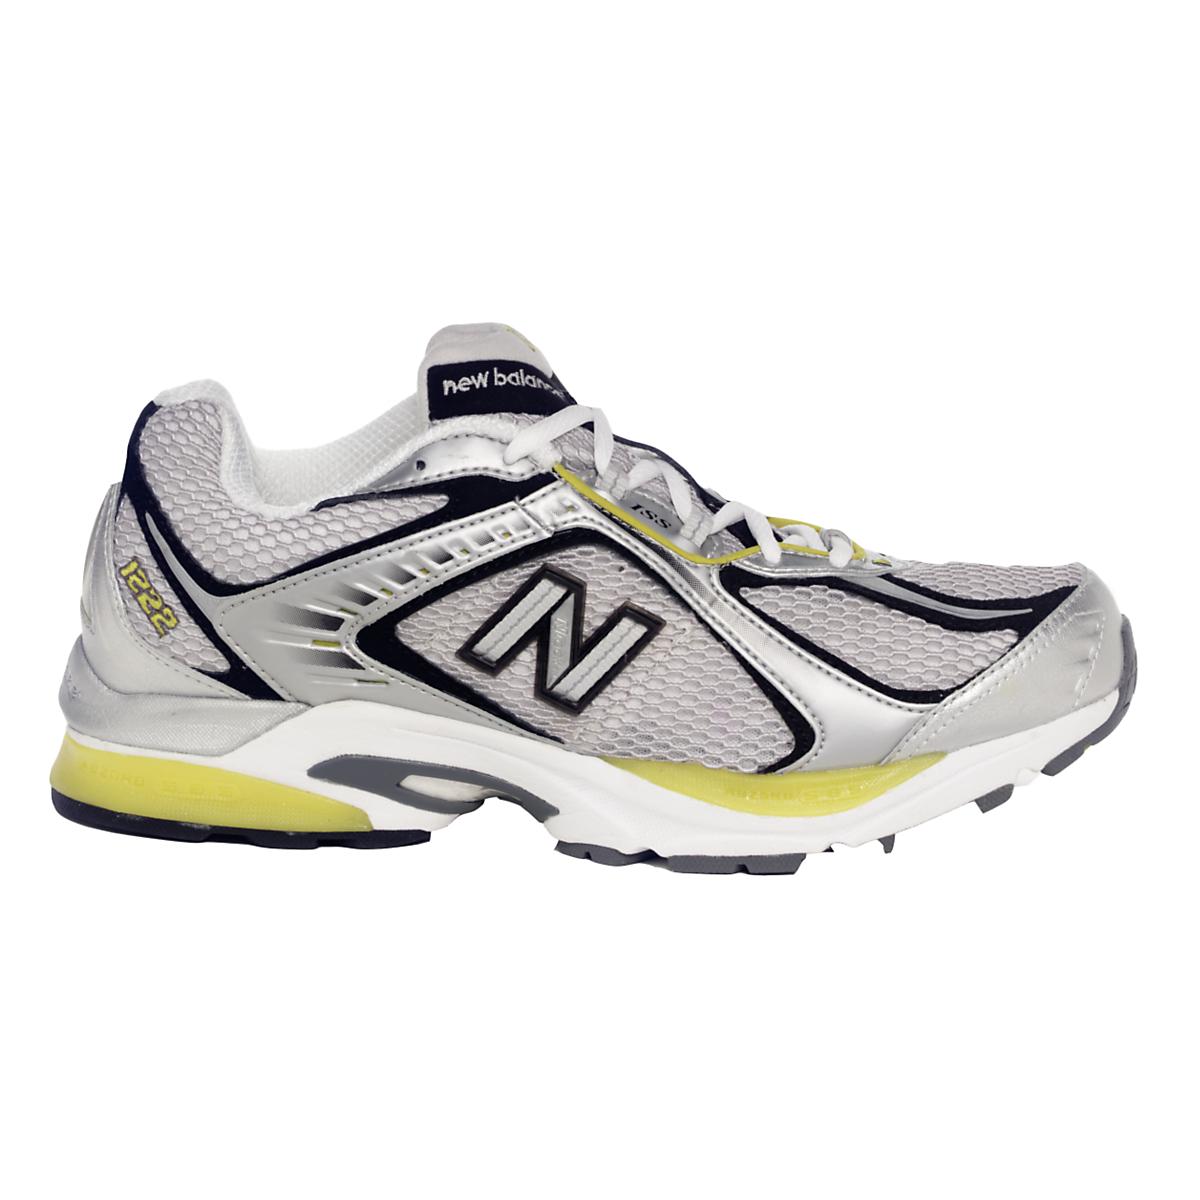 Mens New Balance 1222 Running Shoe at Road Runner Sports